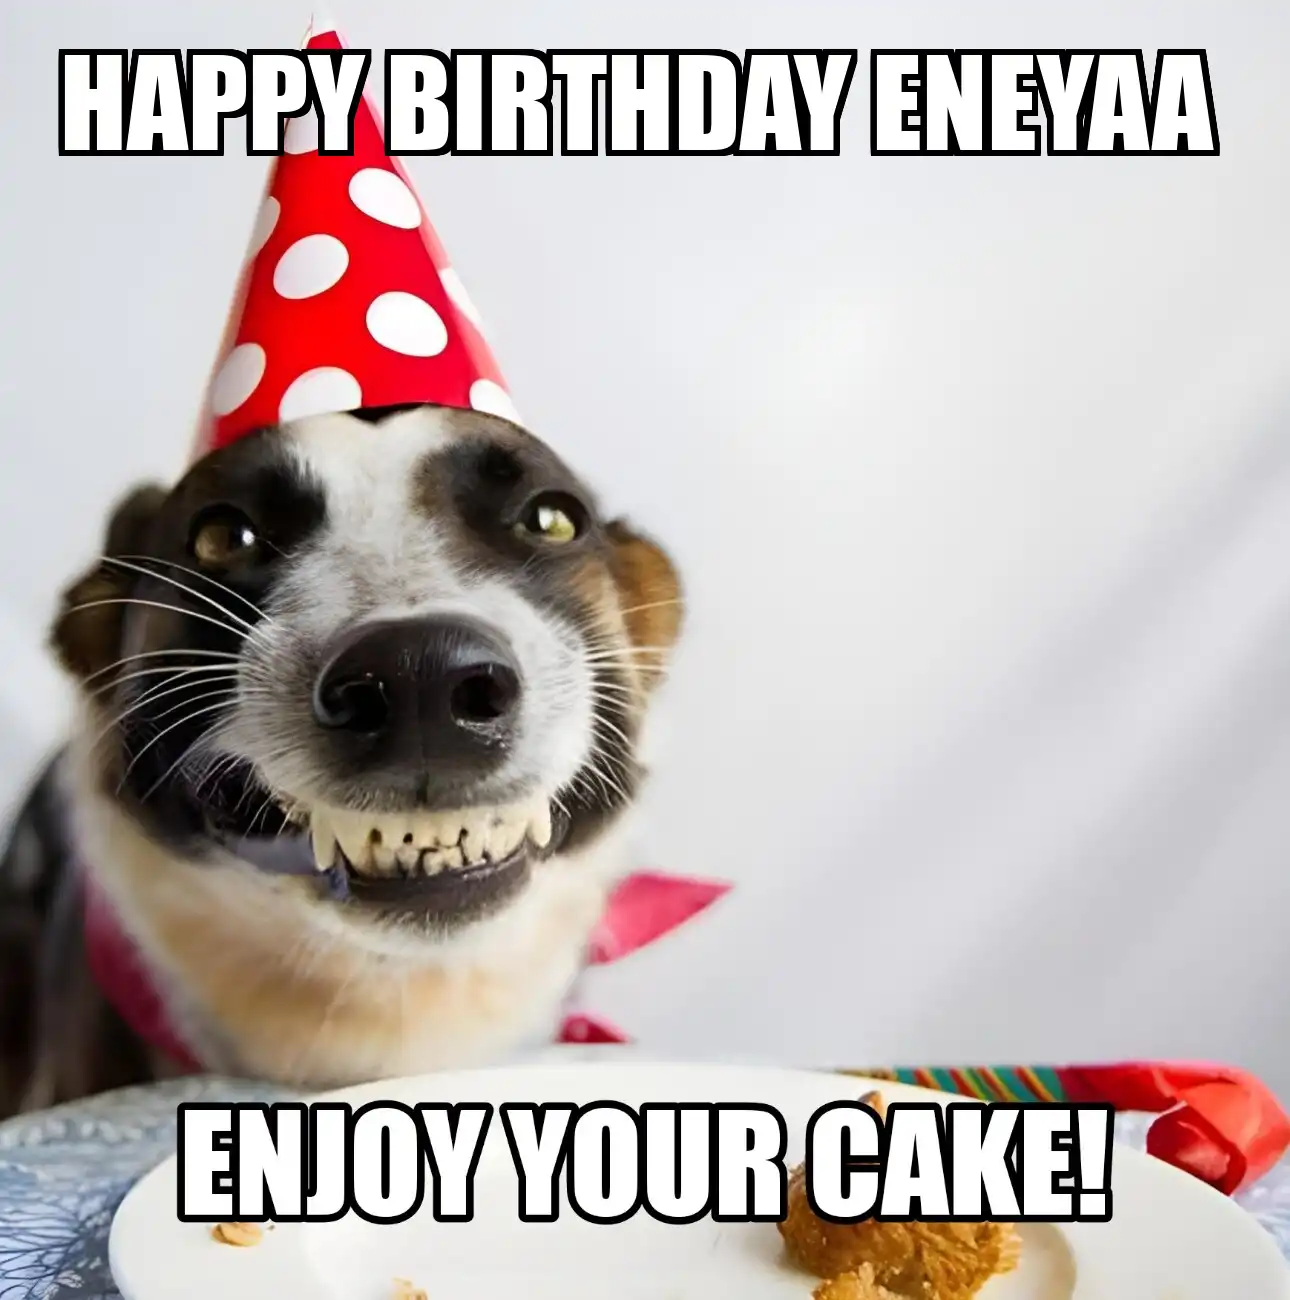 Happy Birthday Eneyaa Enjoy Your Cake Dog Meme